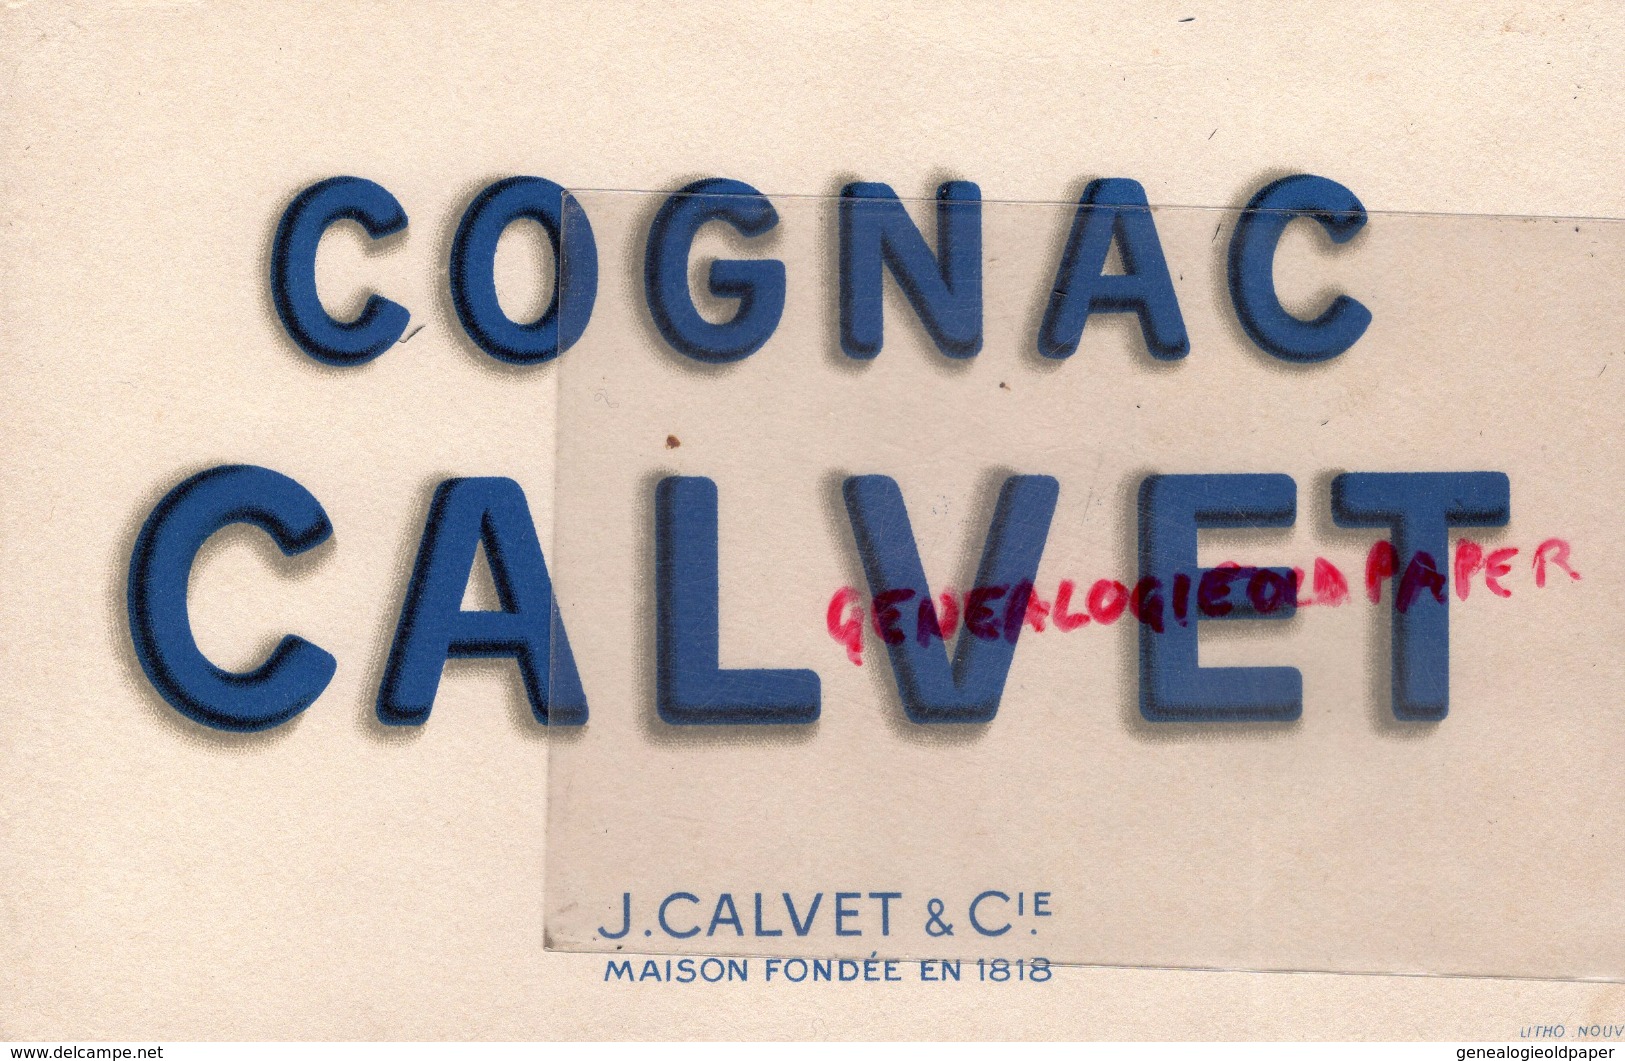 16 - COGNAC - BUVARD  COGNAC CALVET & CIE - Lebensmittel